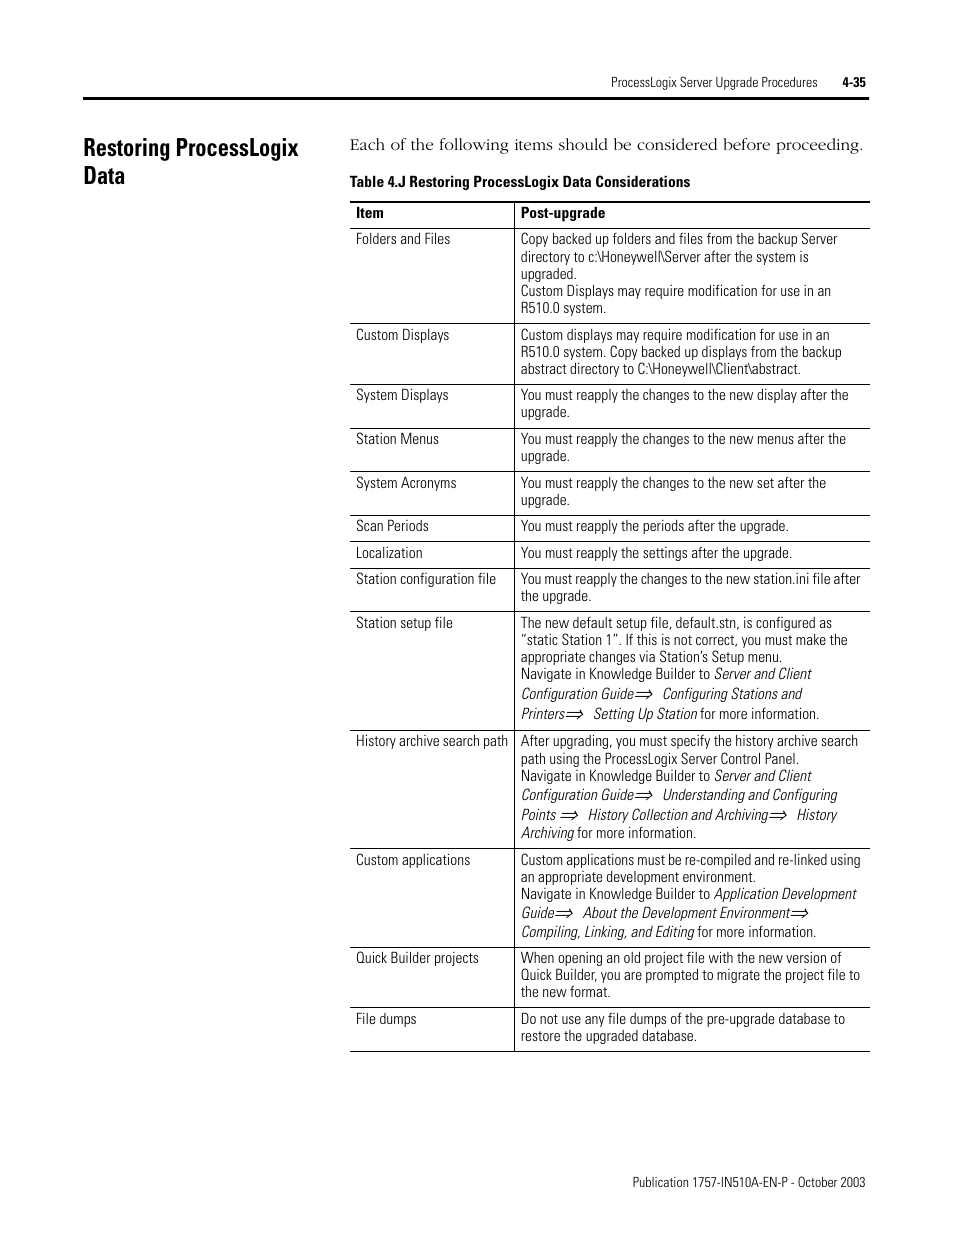 Restoring processlogix data, Restoring processlogix data -35 | Rockwell Automation 1757-SWKIT5100 ProcessLogix R510.0 Installation and Upgrade Guide User Manual | Page 119 / 271